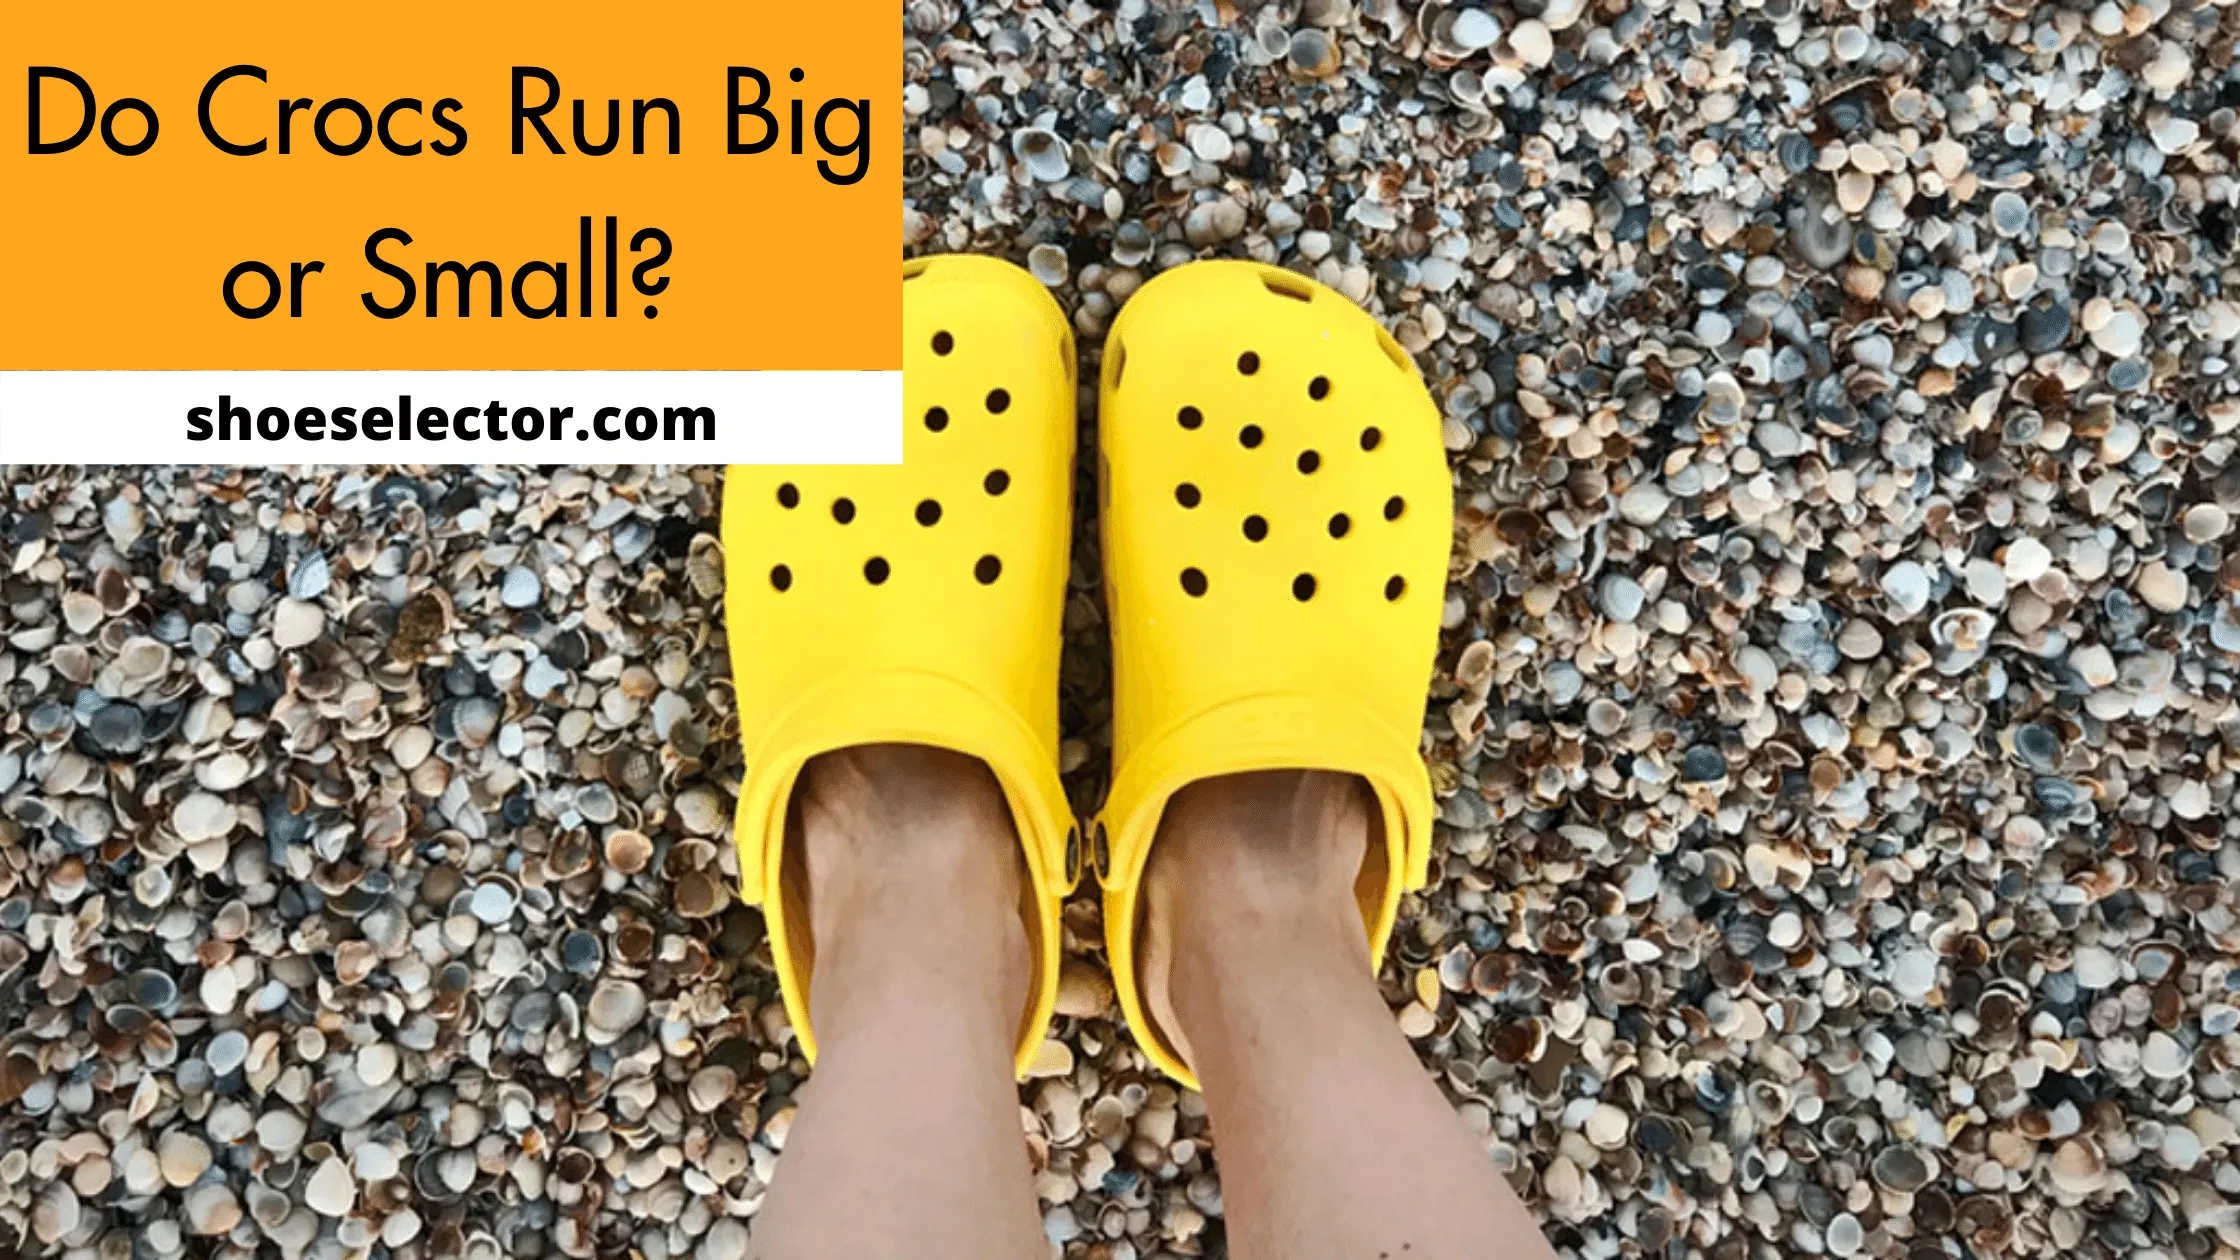 Do Crocs Run Big or Small? Quick Guide